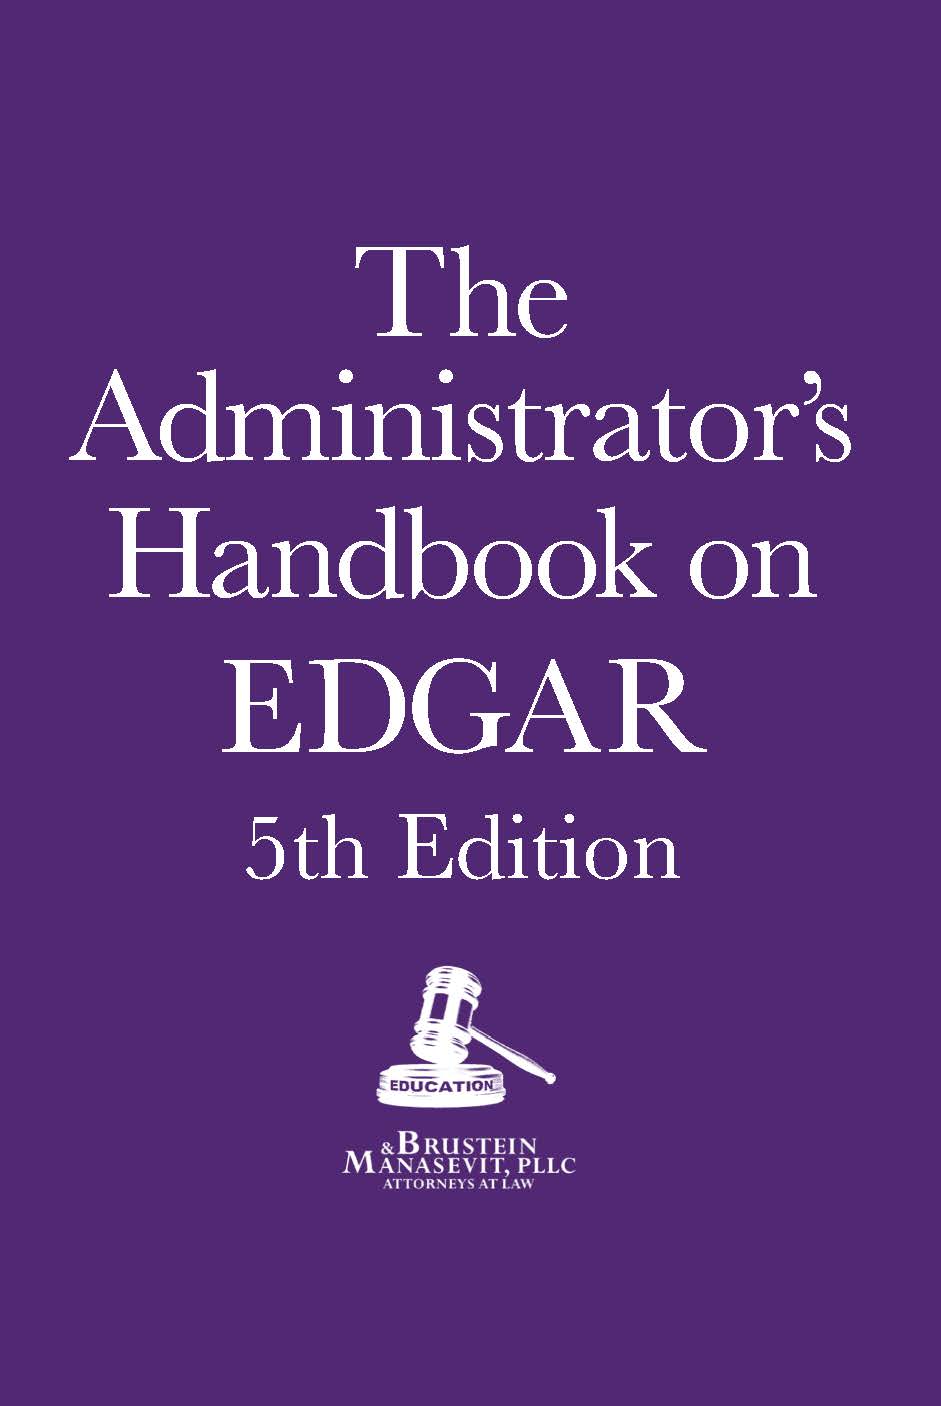 EDGAR 5th Ed Image